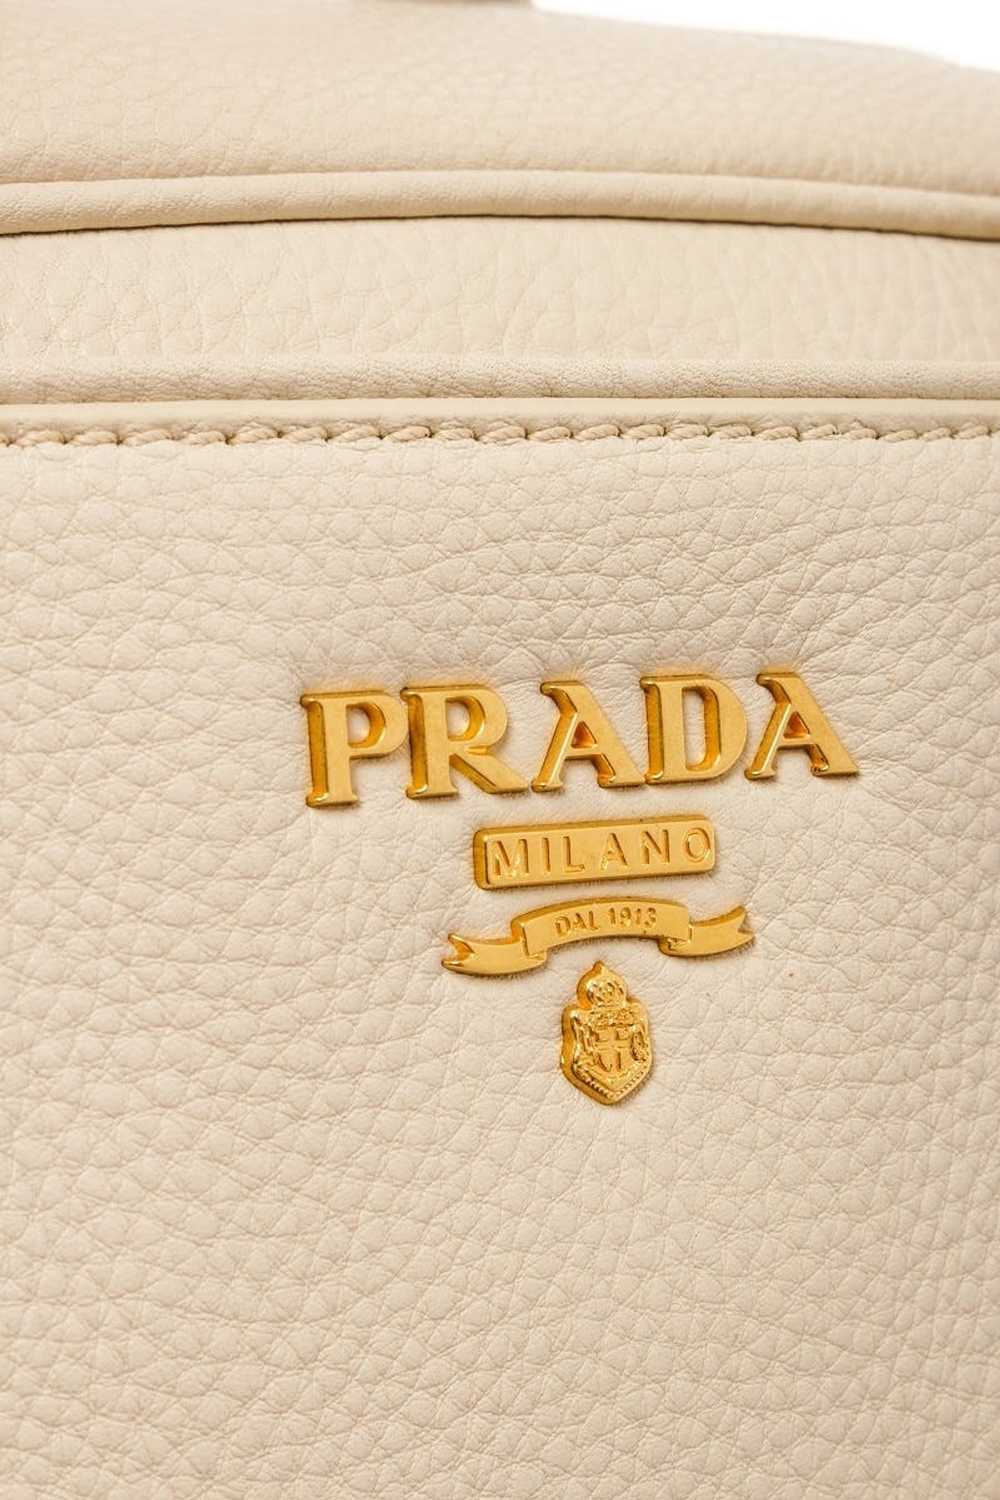 Prada Prada Ivory Leather Vitello Daino Tote Bag - image 5